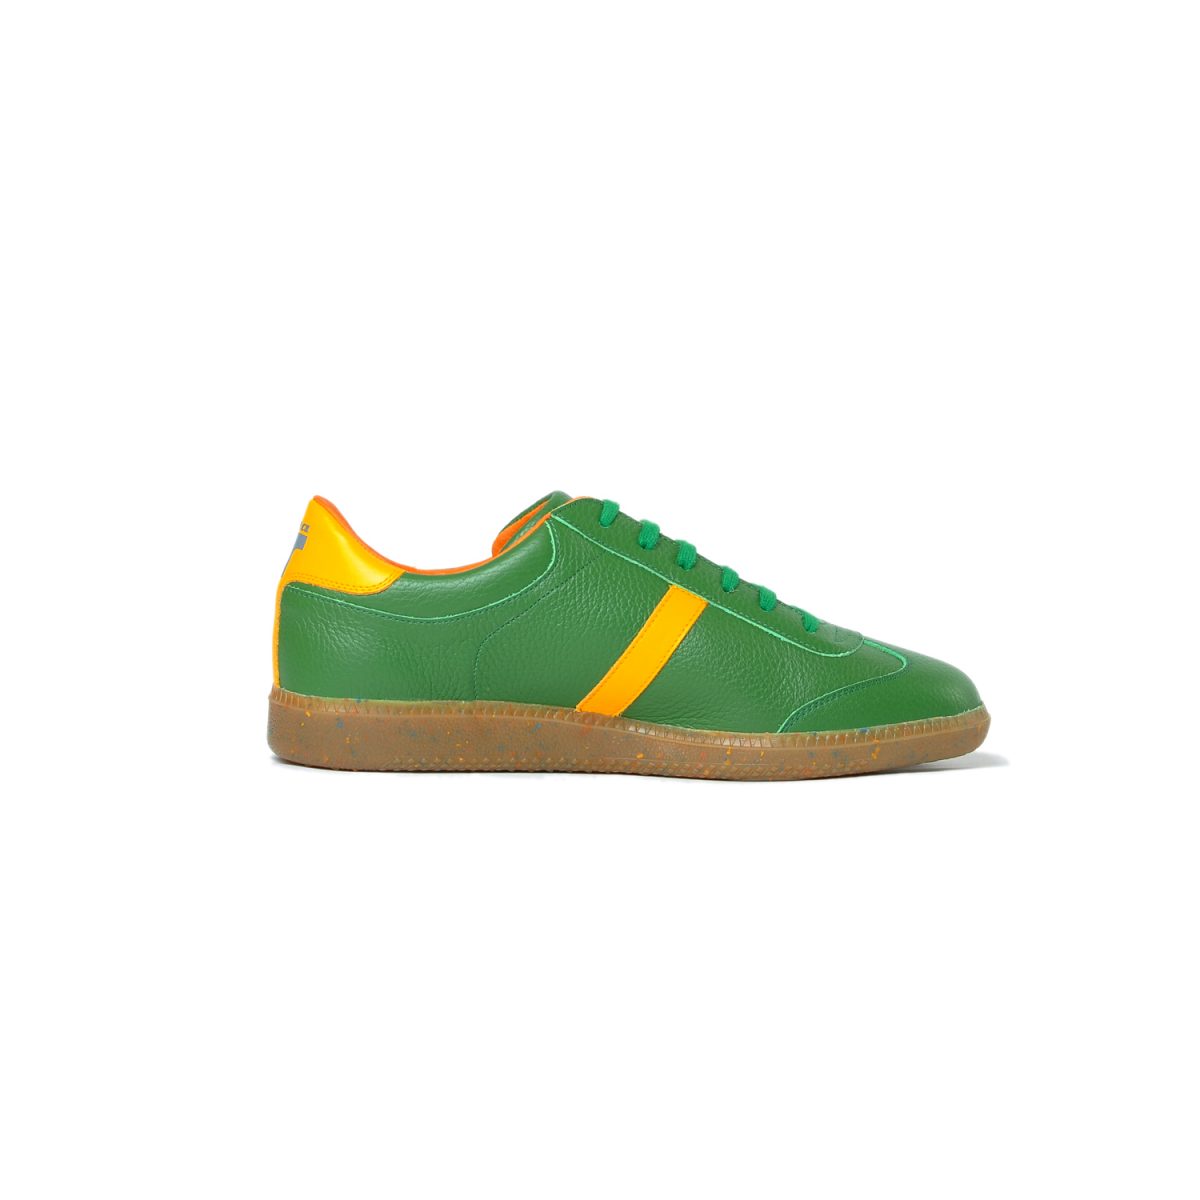 Tisza shoes - Compakt - Green-yellow